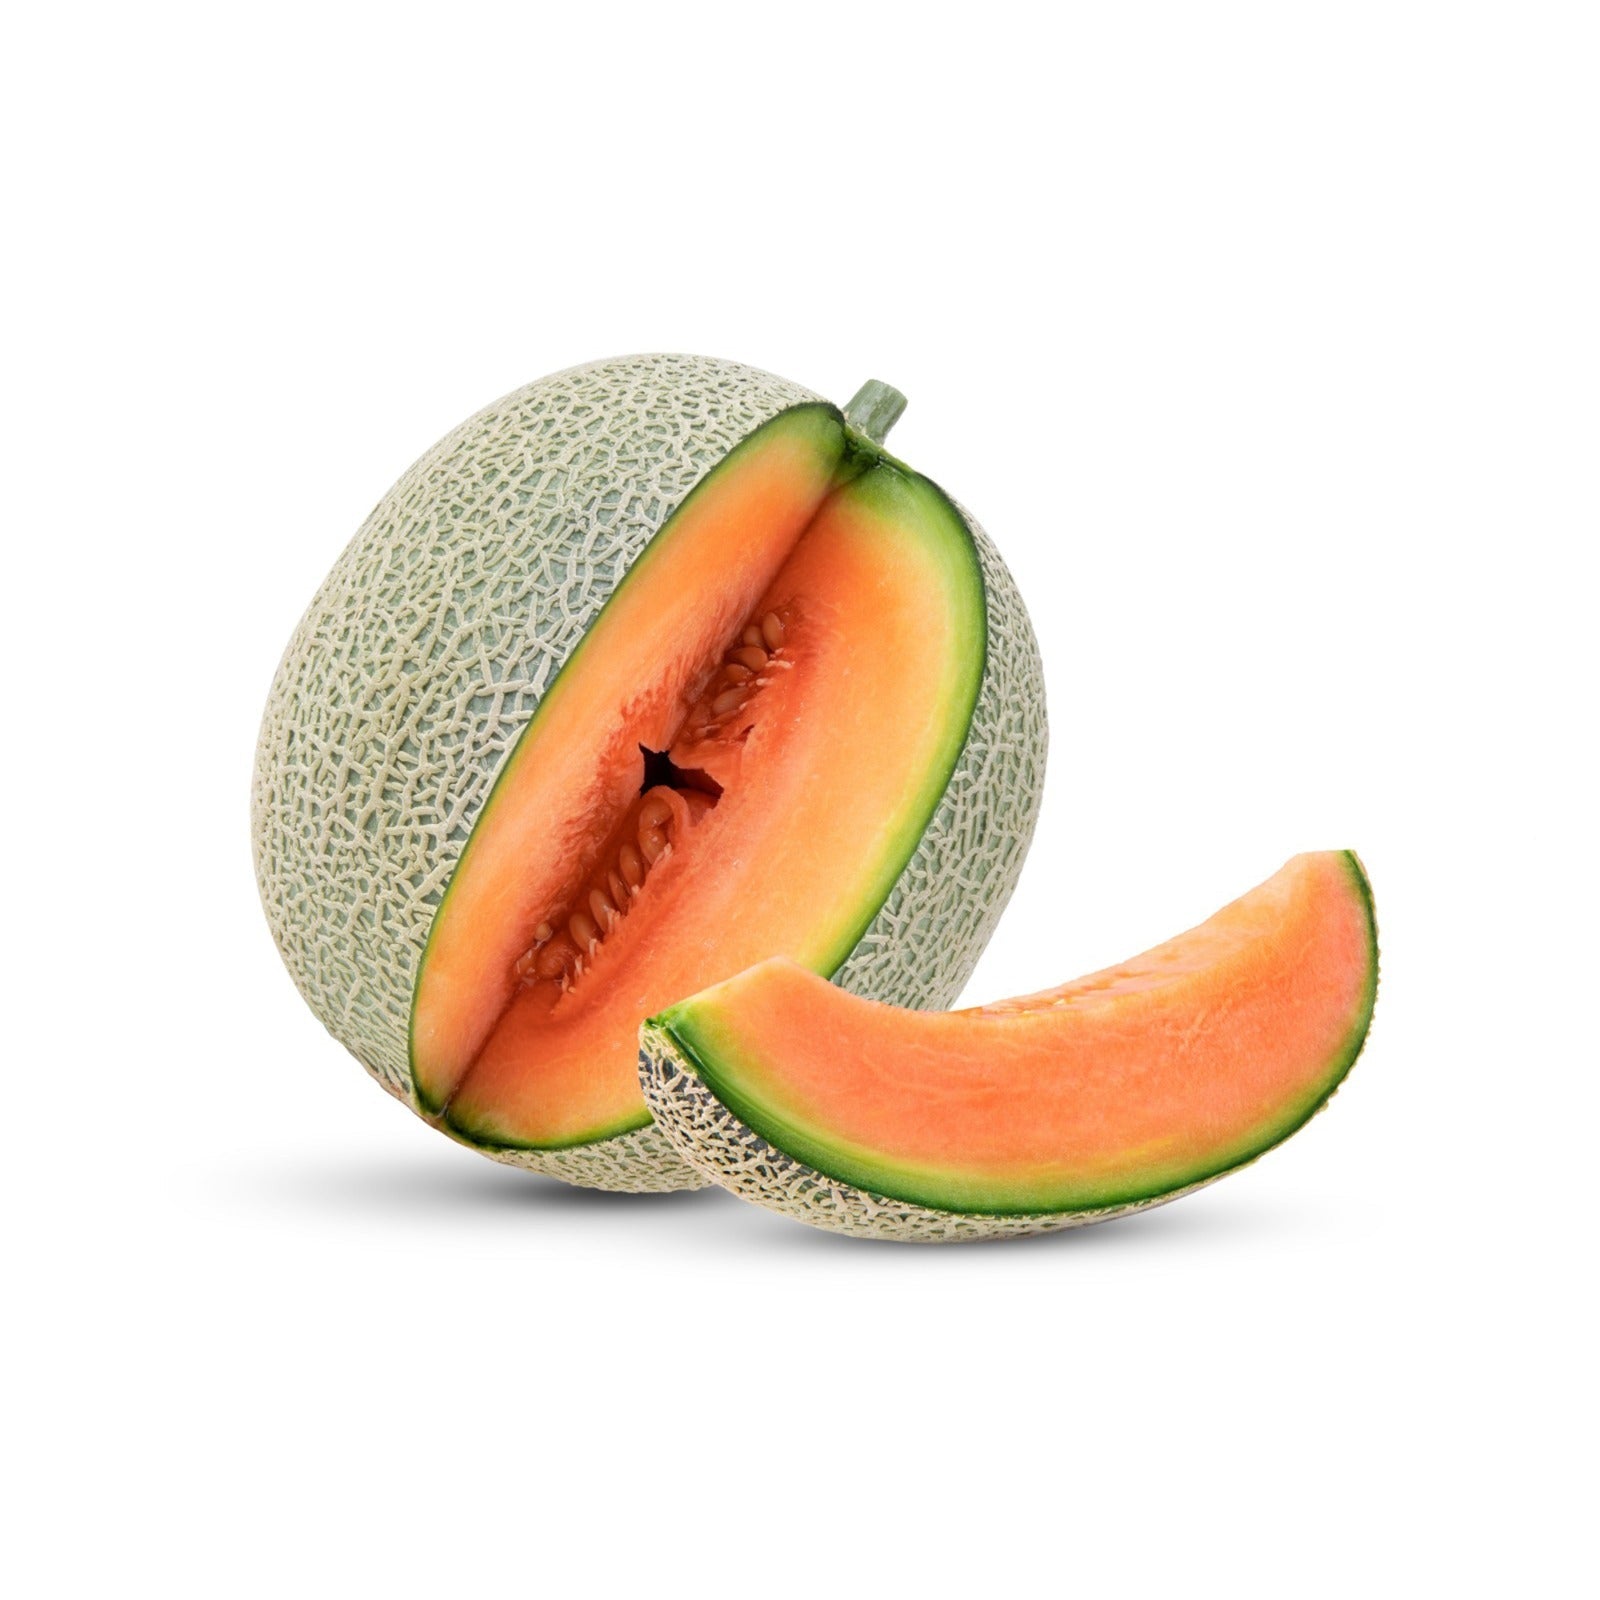 Melon - Cantaloupe | Exotic Fruits - Rare & Tropical Exotic Fruit Shop UK